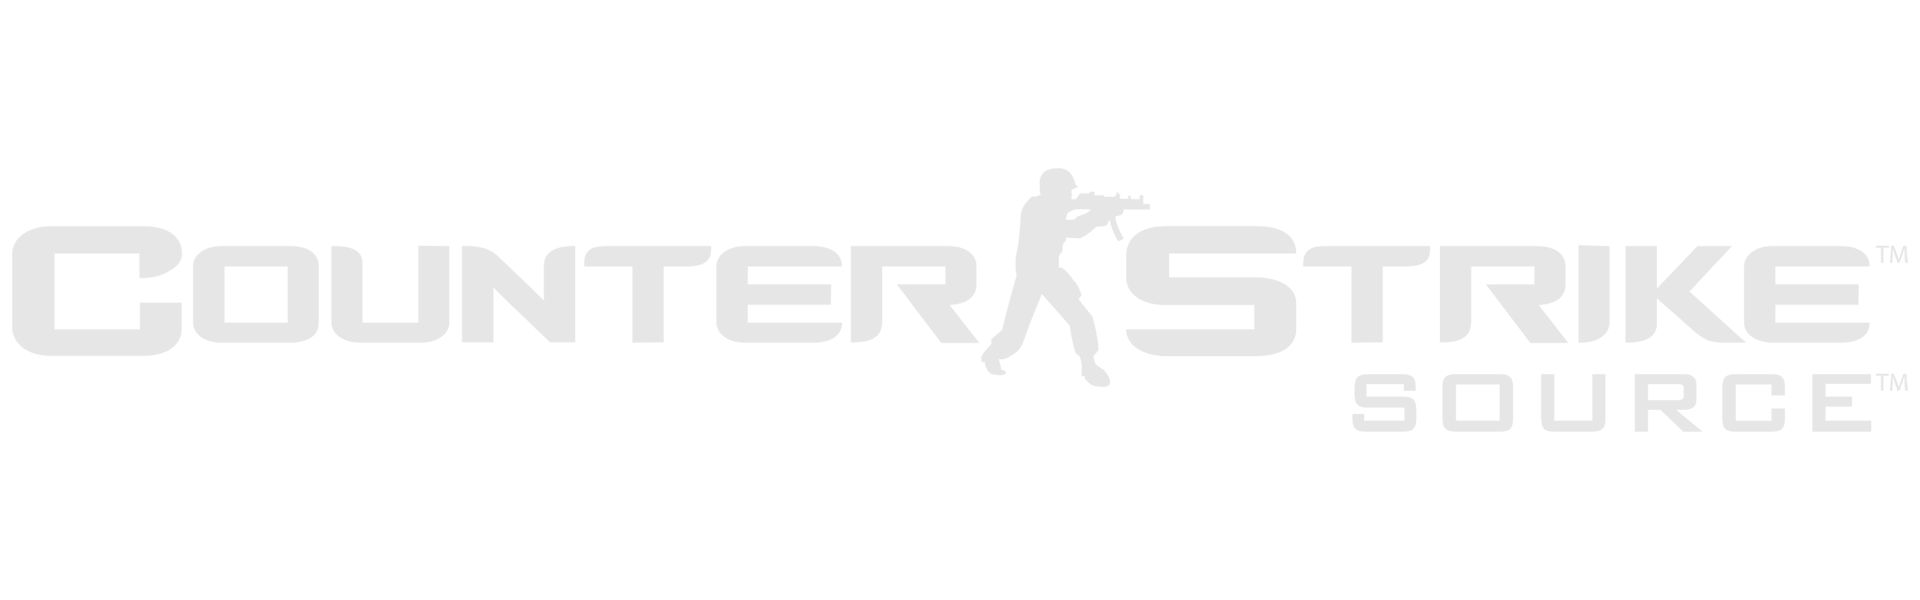 counter-strike-source-logo-1